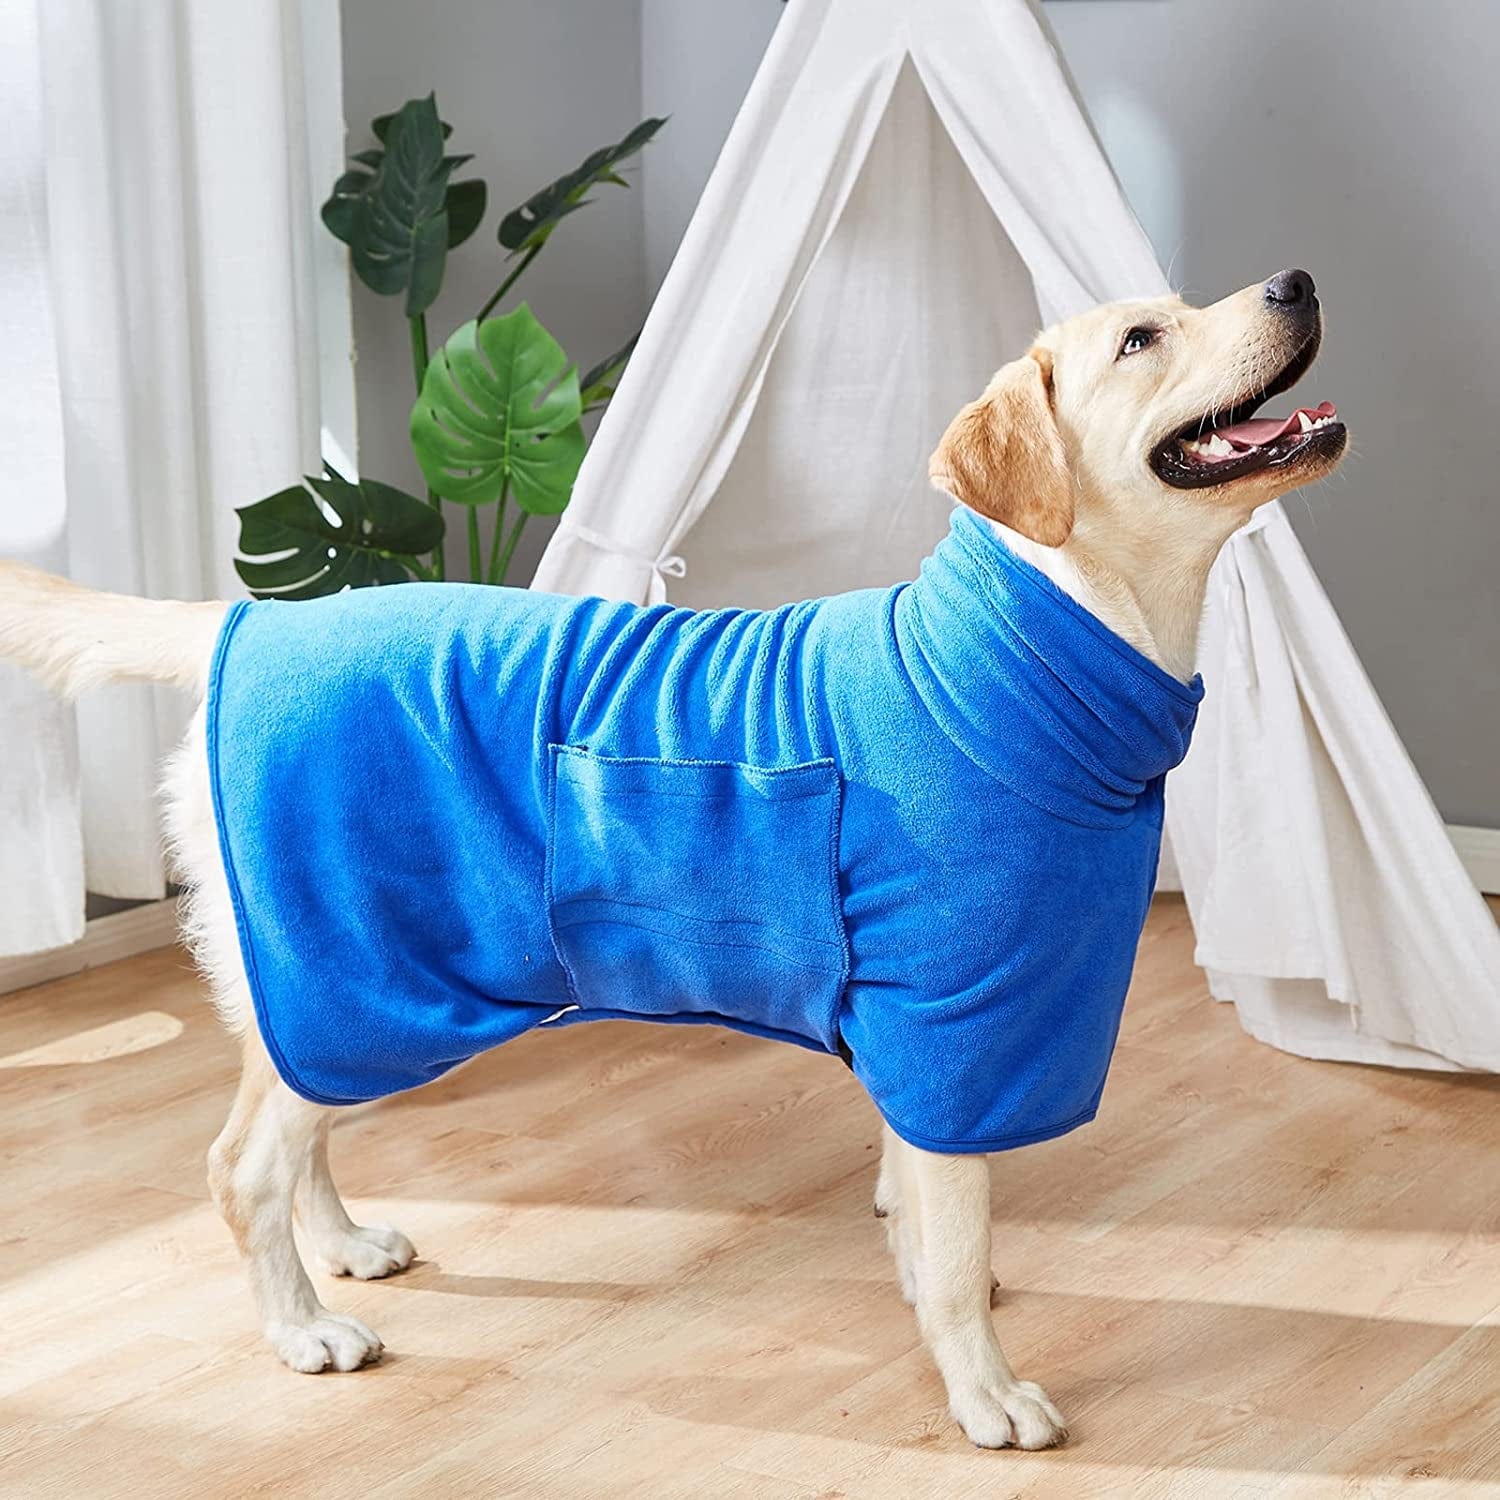 zorela dog drying coat towel robe super absorbent dog bathrobe 400gsm microfibre towel super soft fast drying pet dog robe adjustable collar waist dog dressing gown for cat puppy smal d049b05b fe59 4f37 9643